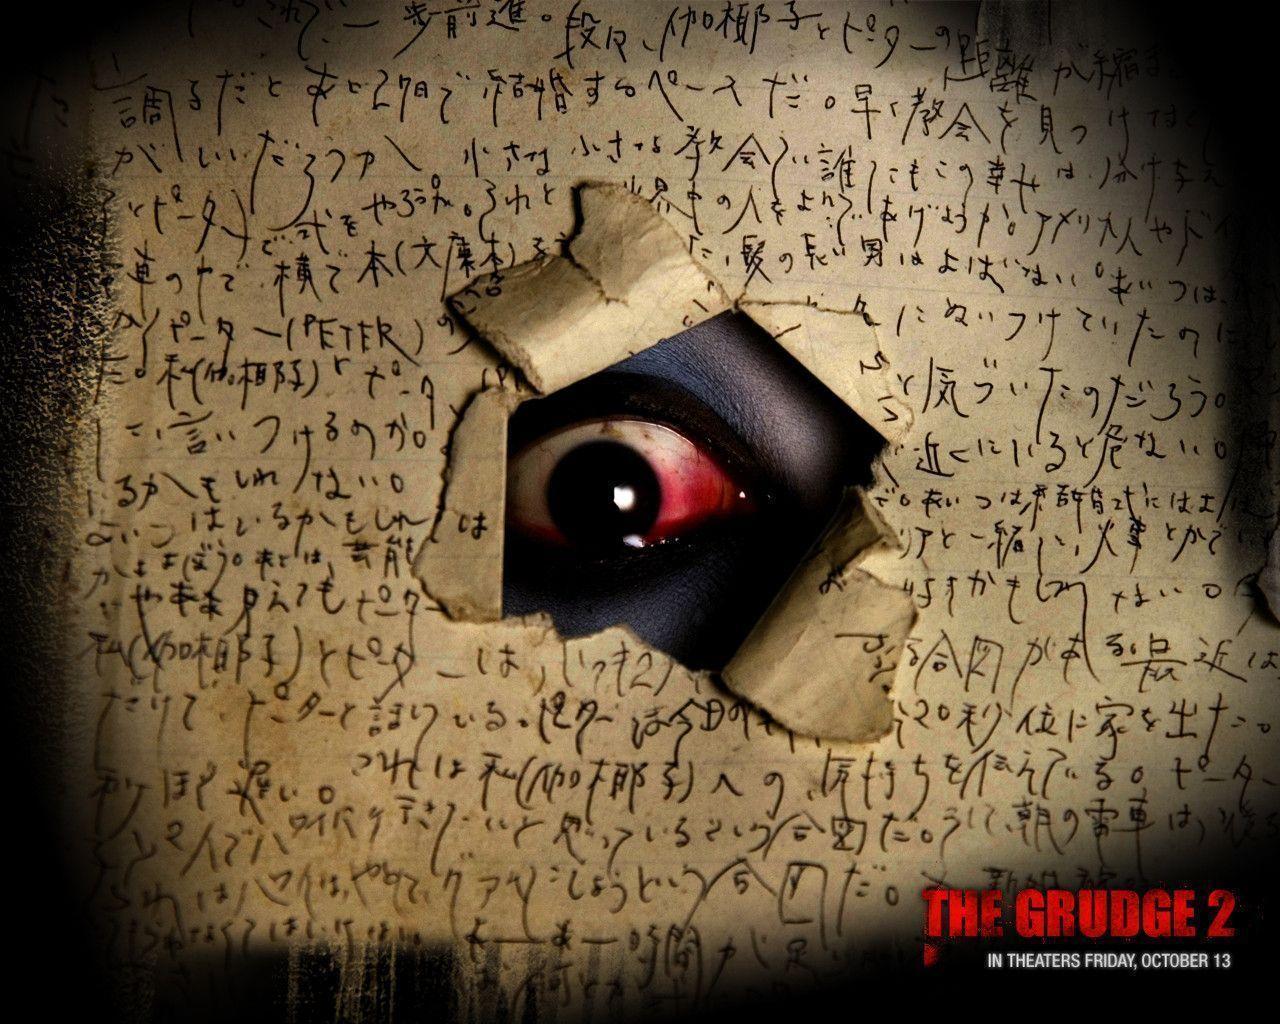 Film horror immagini The Grudge 2 HD wallpaper and background foto